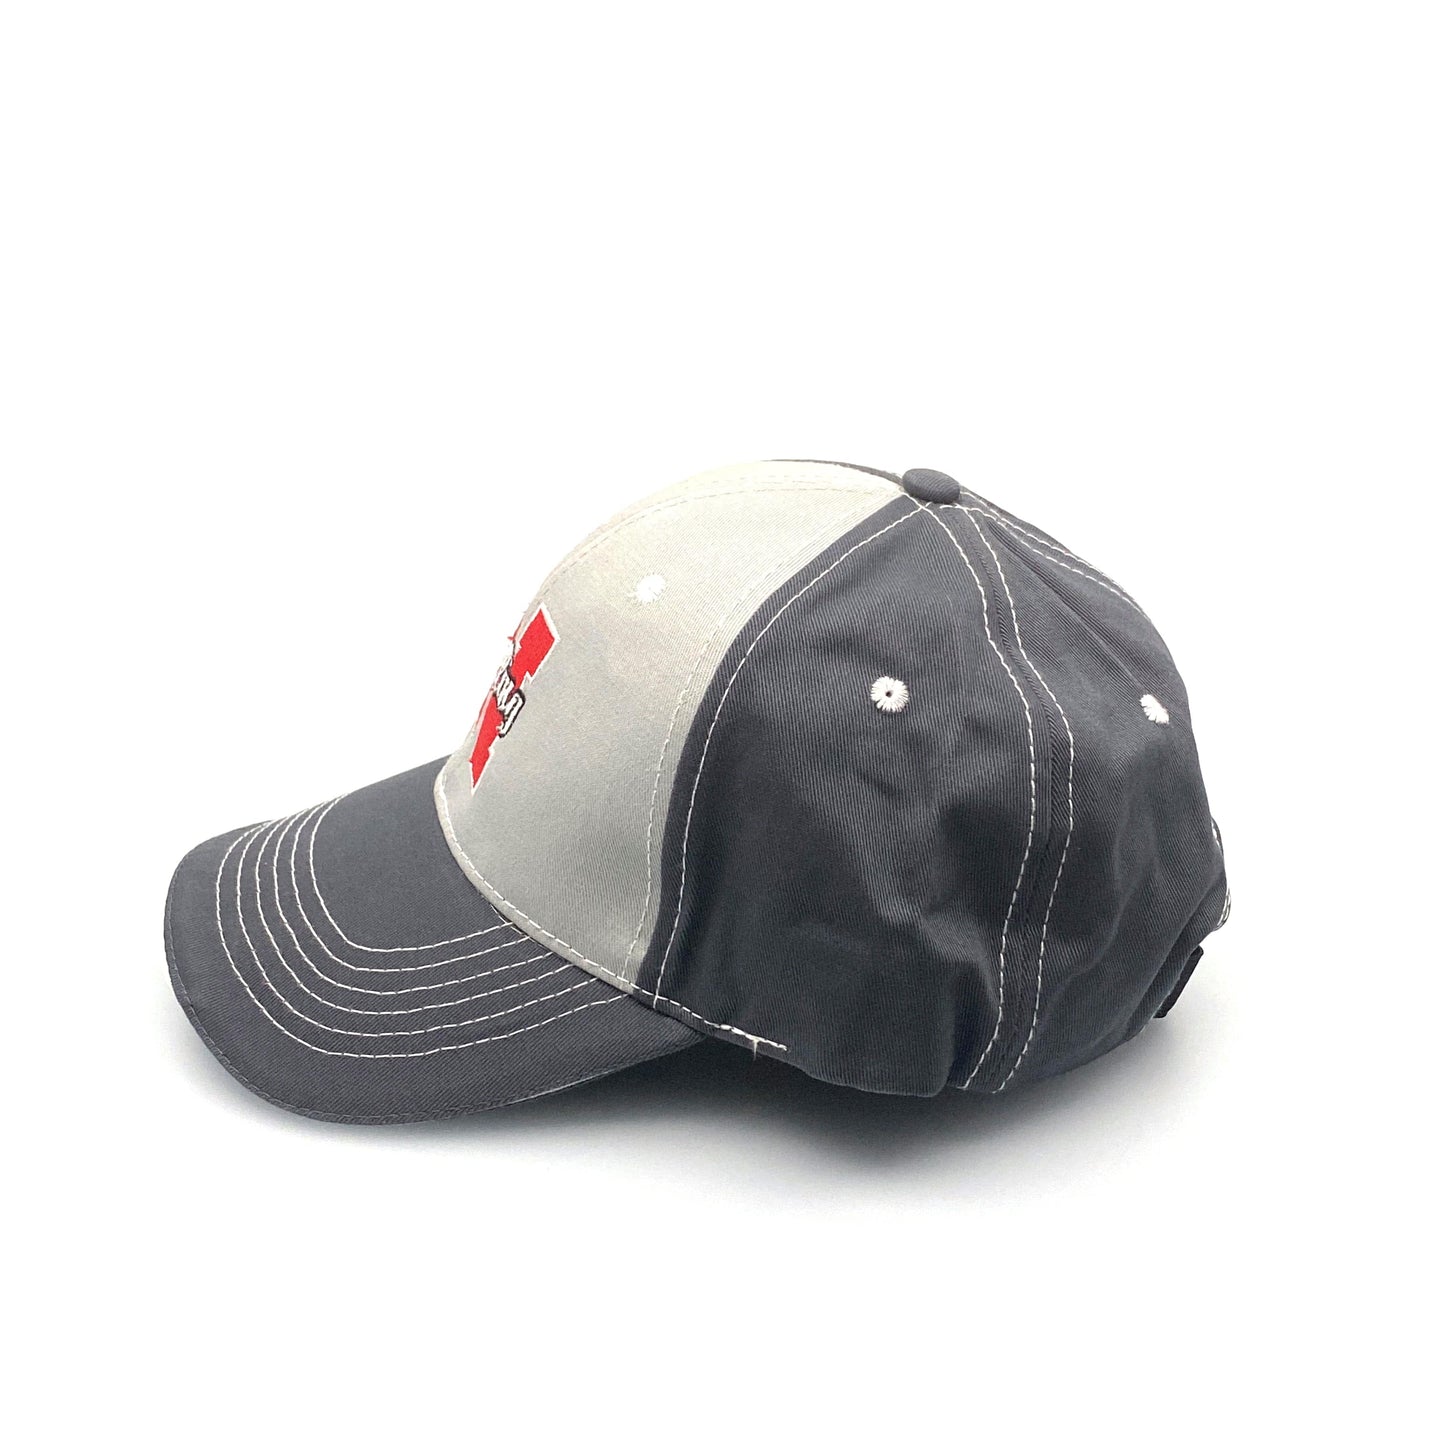 Sportsman “Pulling N” Nebraska Hat Adjustable Gray Baseball Cap